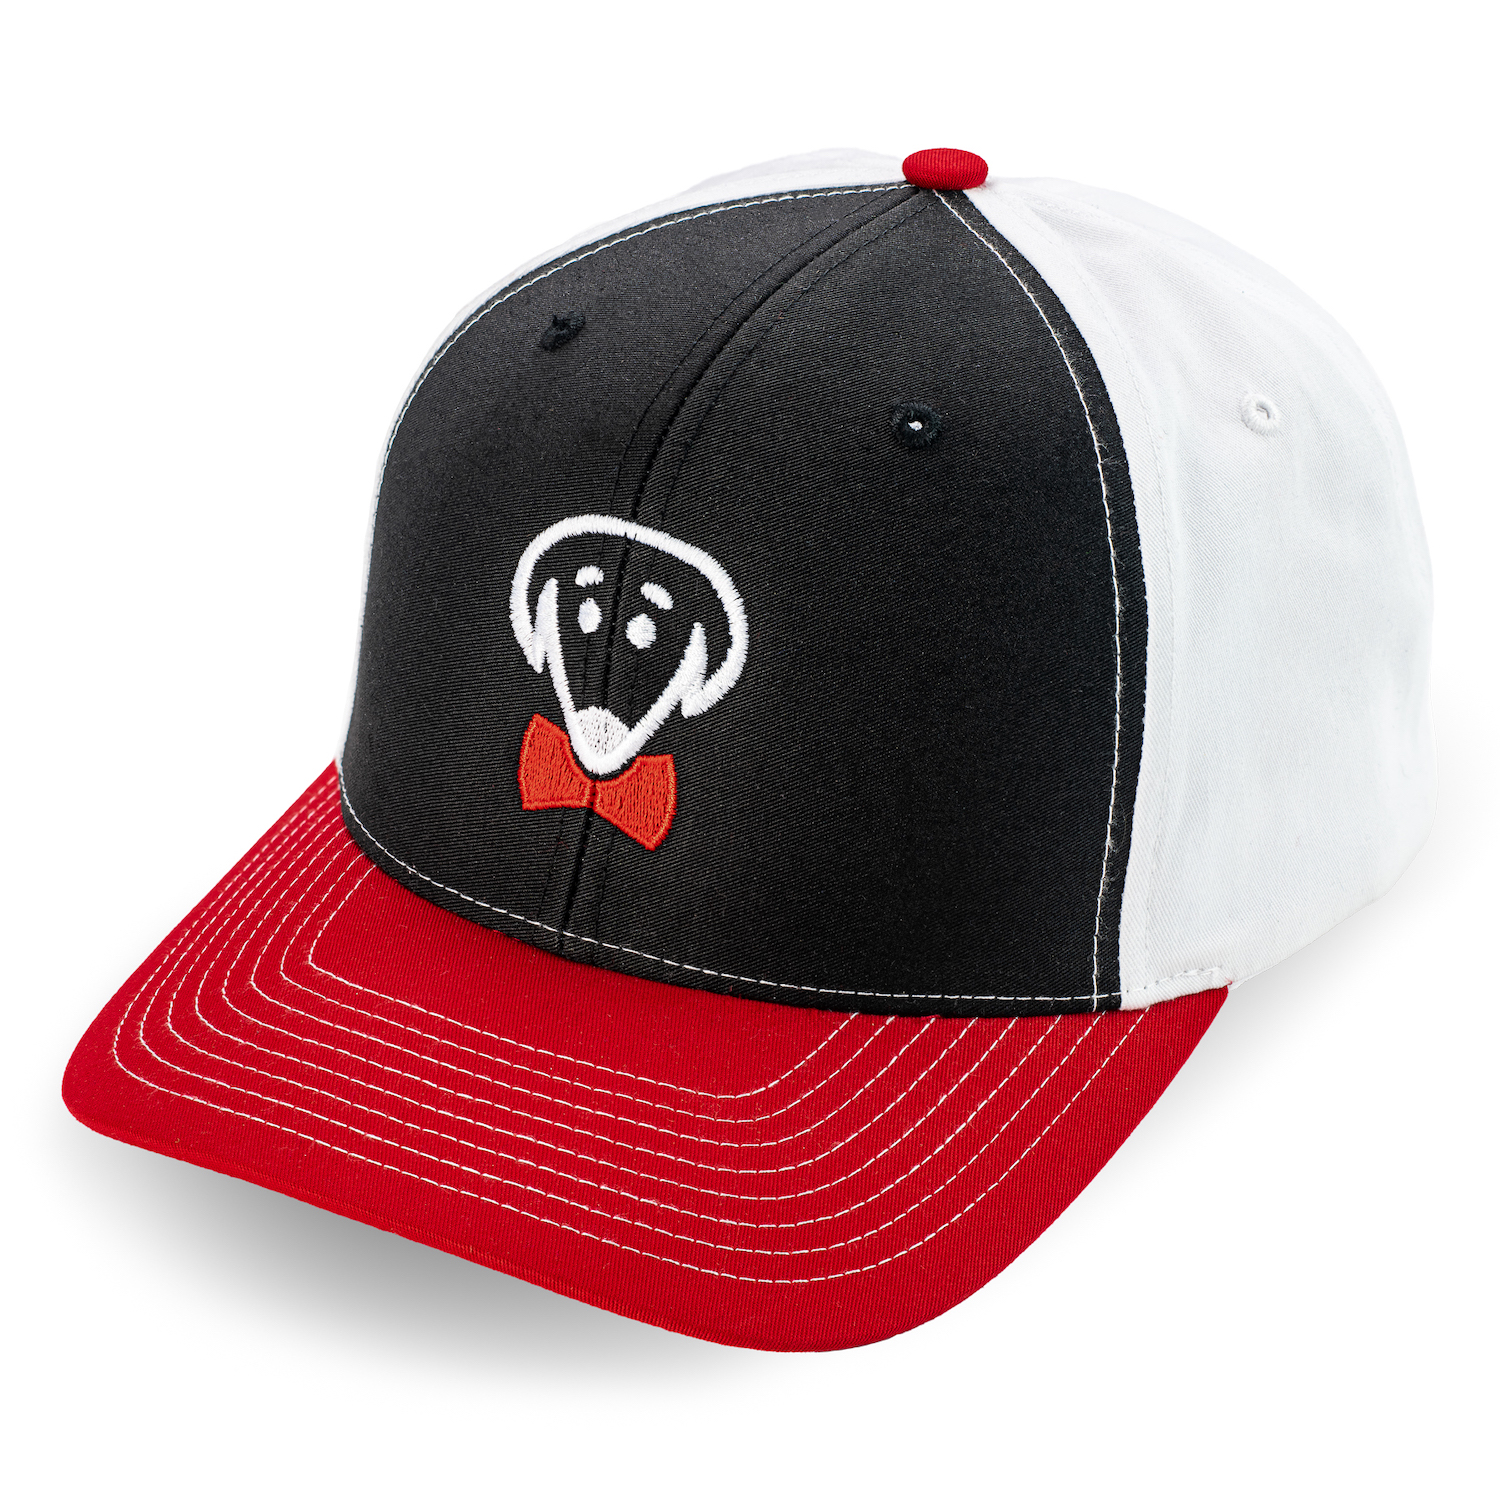 Beau Tyler - Sugar Ray baseball hat red black white front